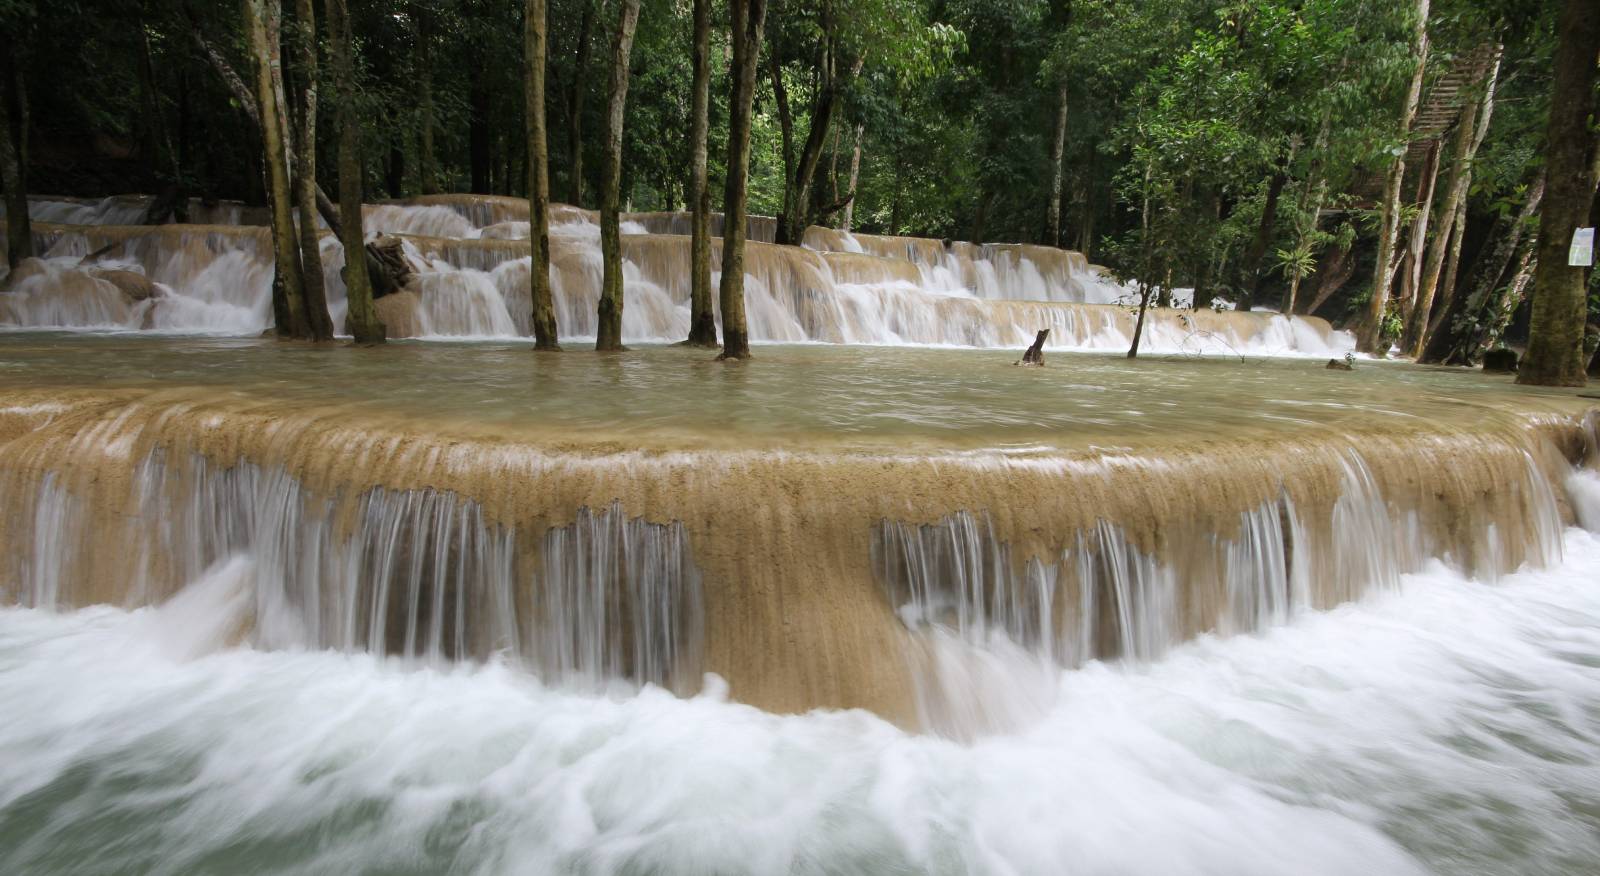 Discovering the beauty of Luang Prabang Waterfalls